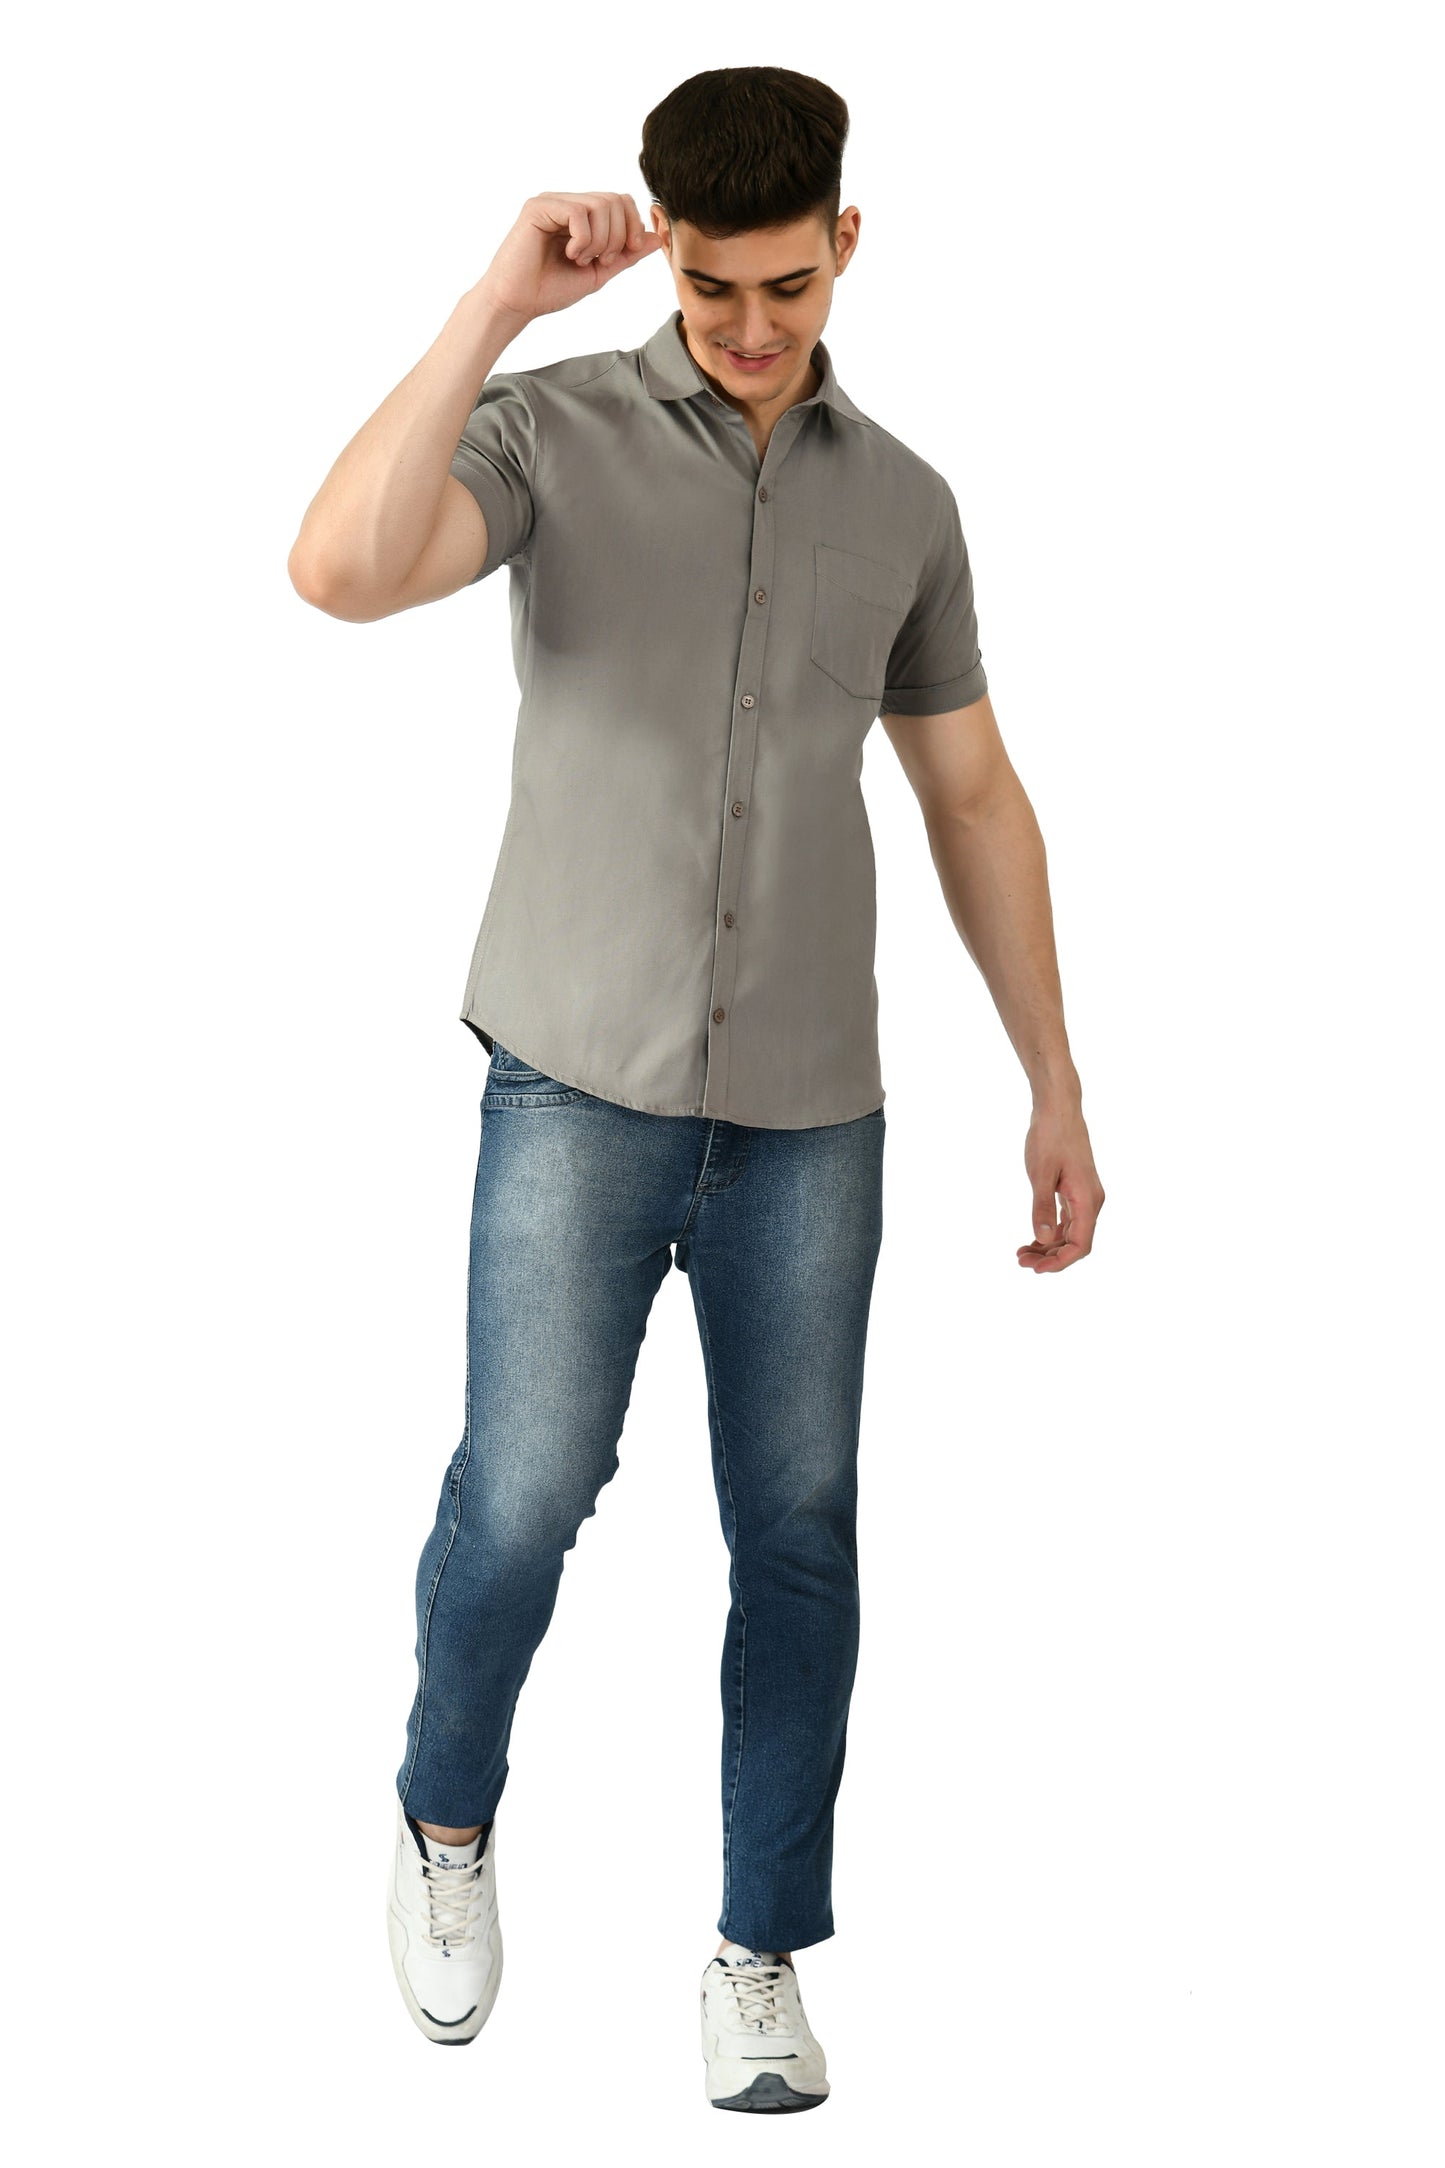 Short Sleeve Cotton Spread Collar Men's Shirt - Castlerock Gray